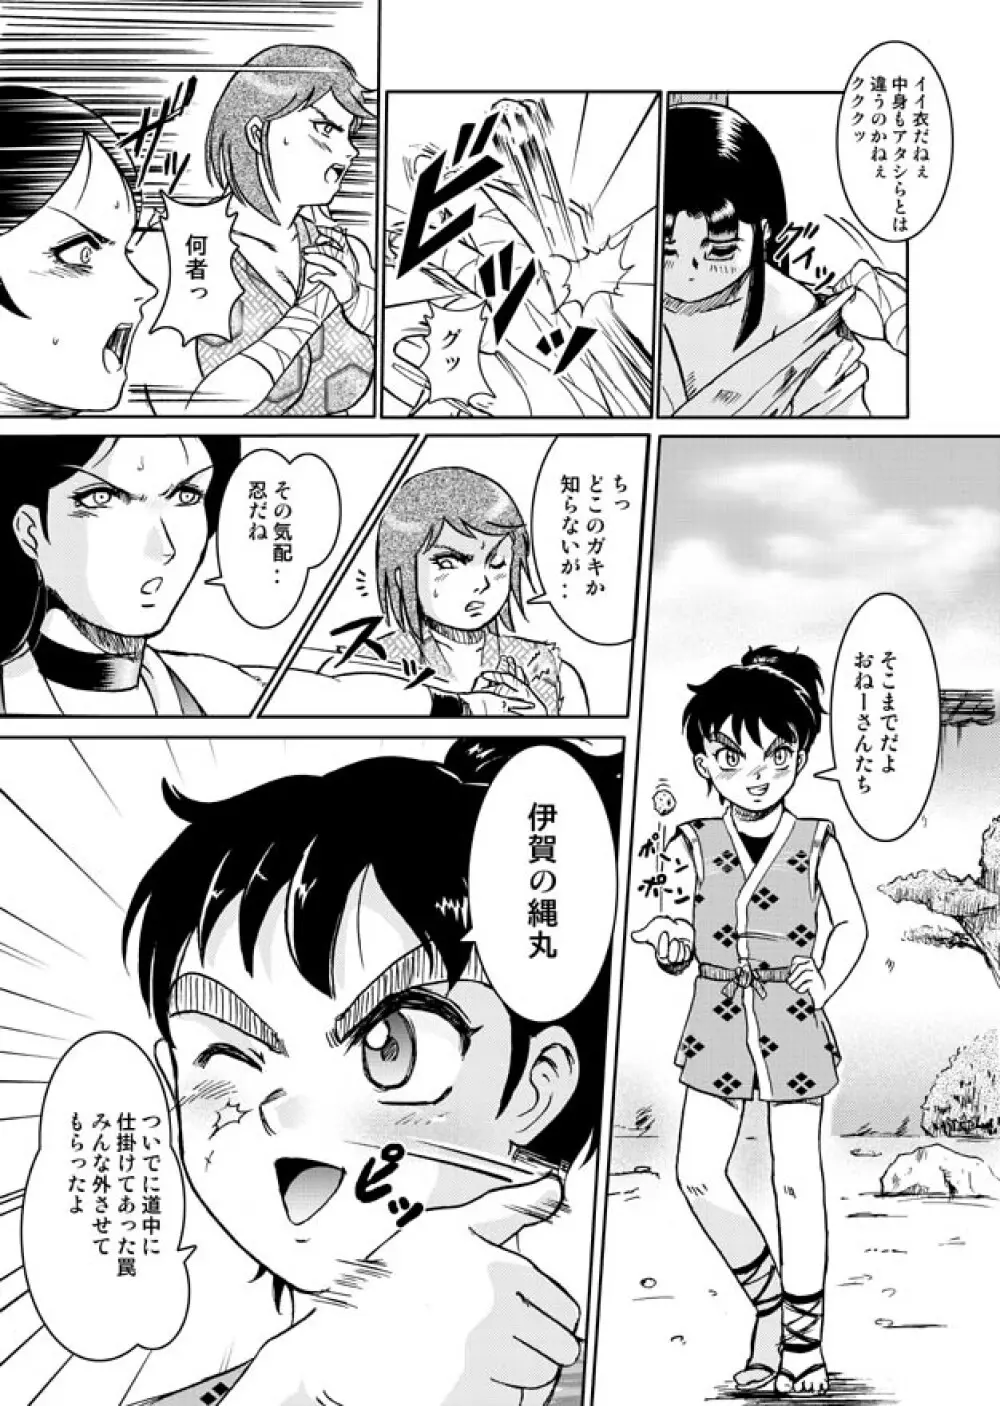 Same-themed manga about kid fighting female ninjas from japanese imageboard. 3ページ